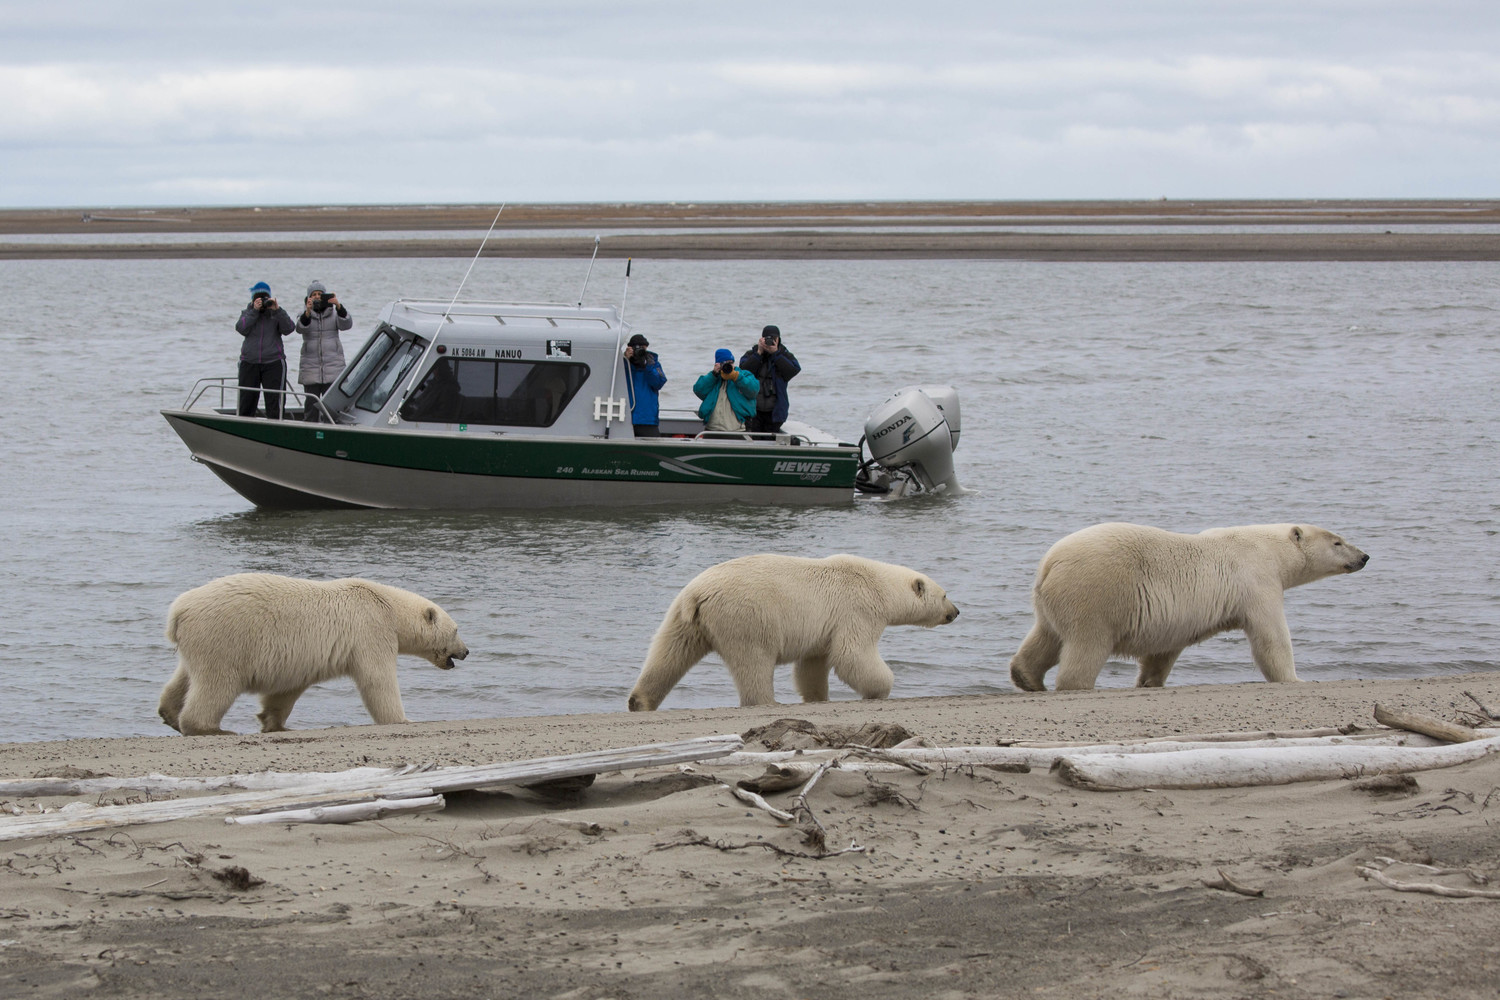 People on a boat watch polar bears walking on the shore